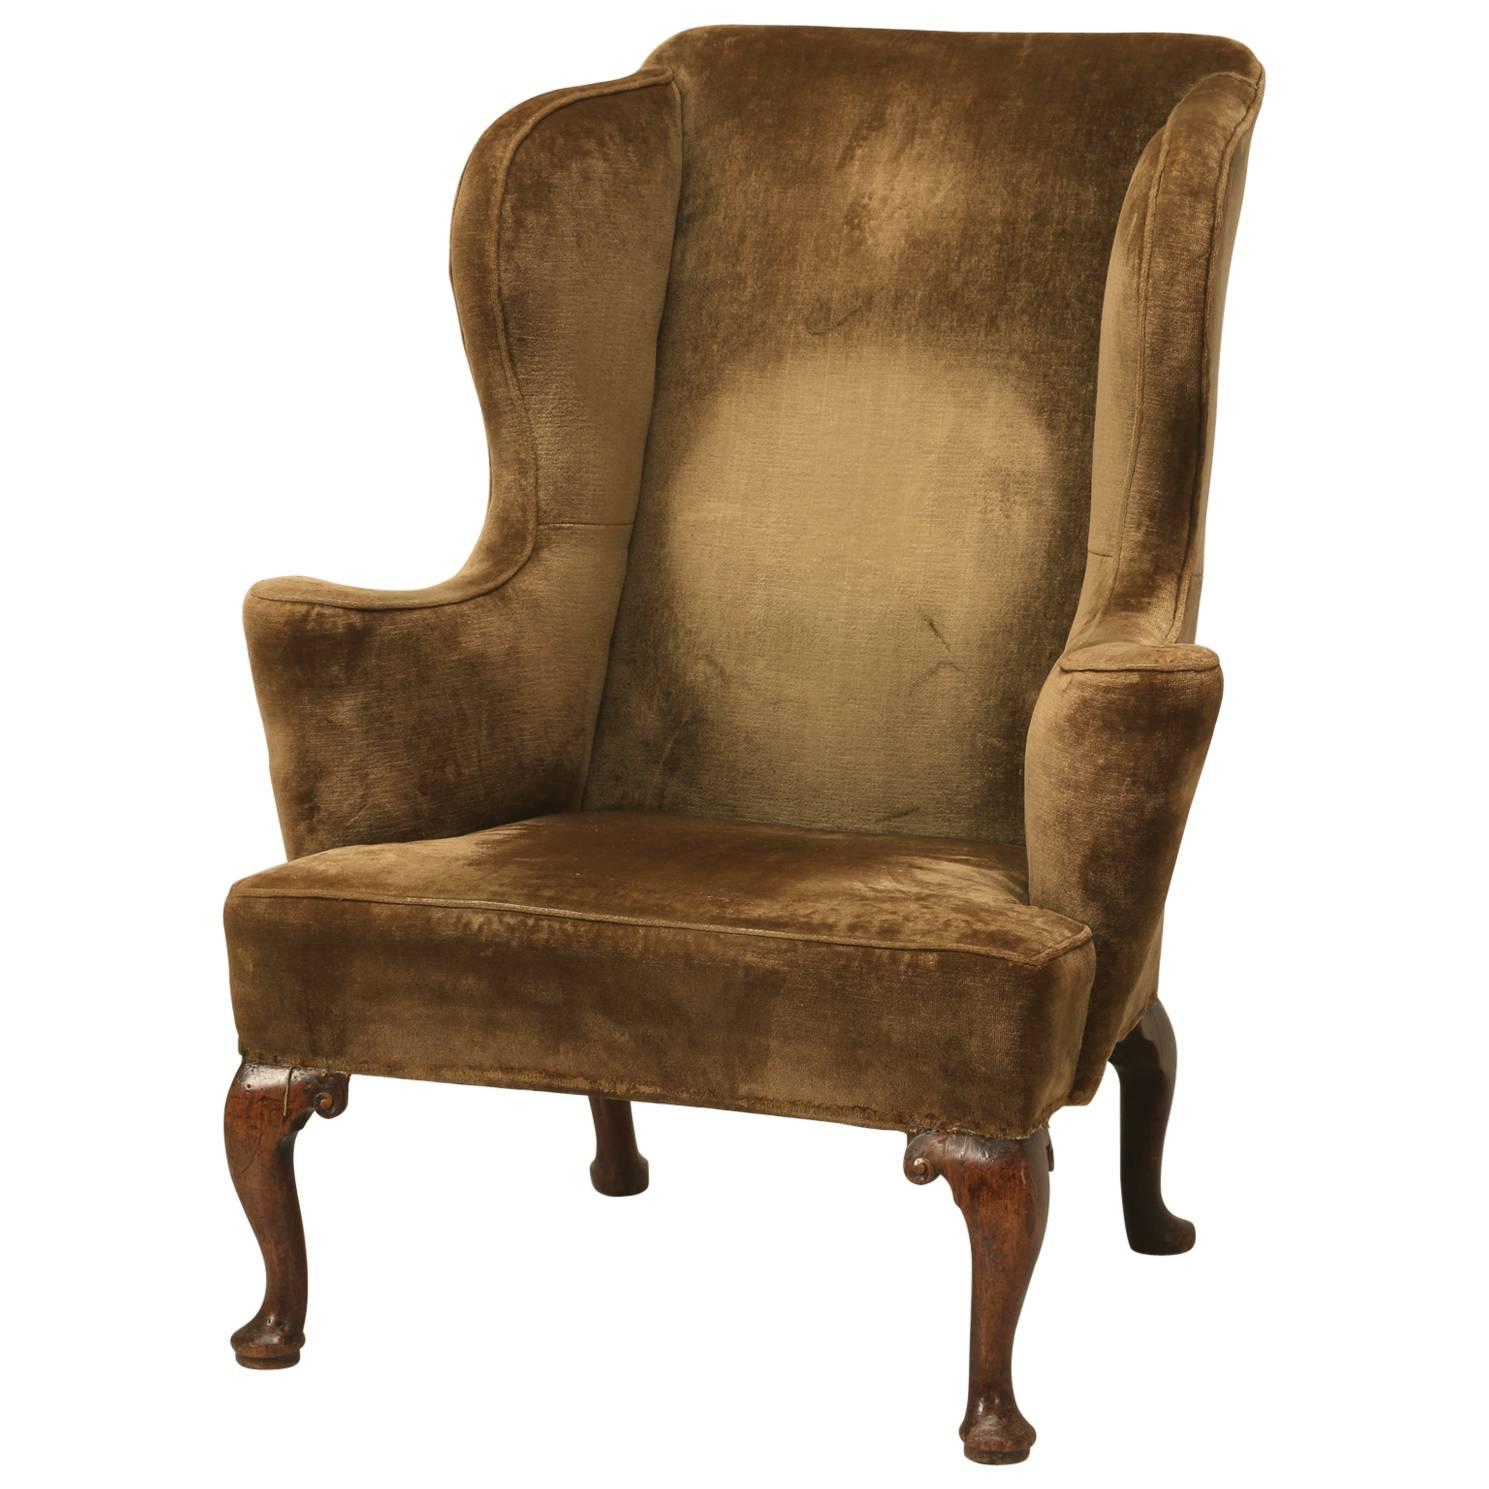 George I Period Chair, circa 1720-1730